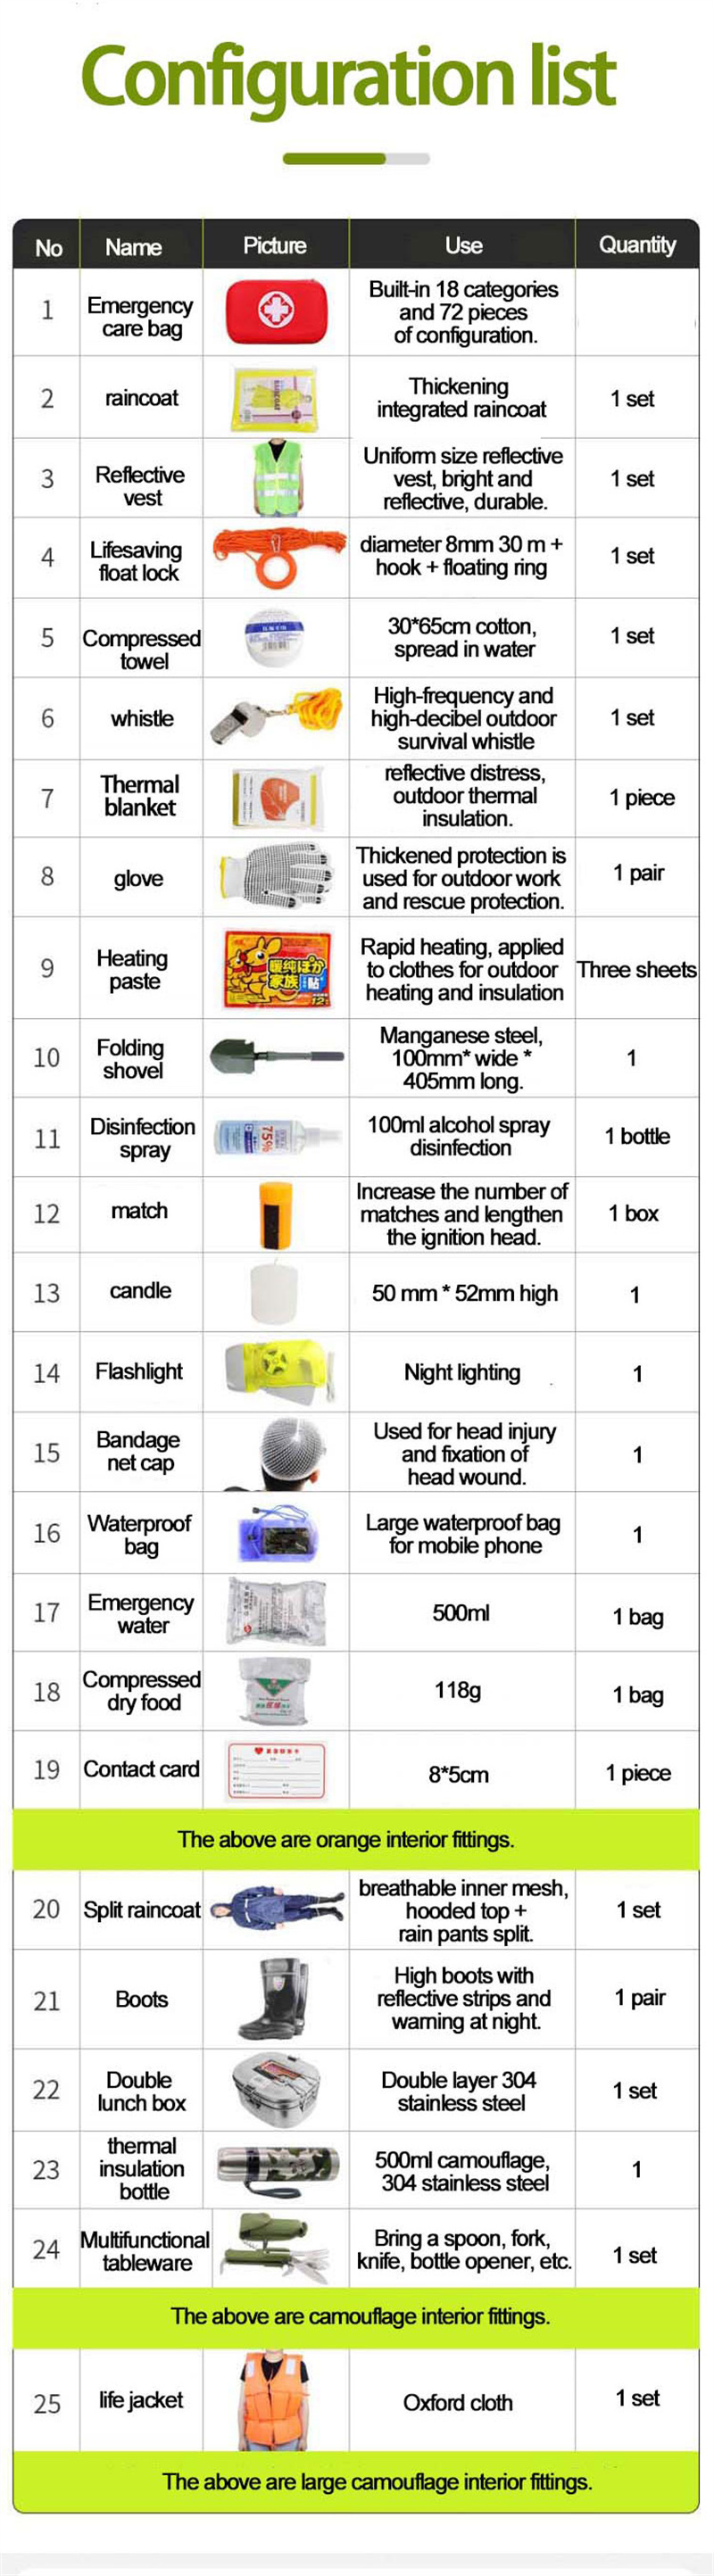 Mini First Aid Kit Bag Medical First Aid Field Kit